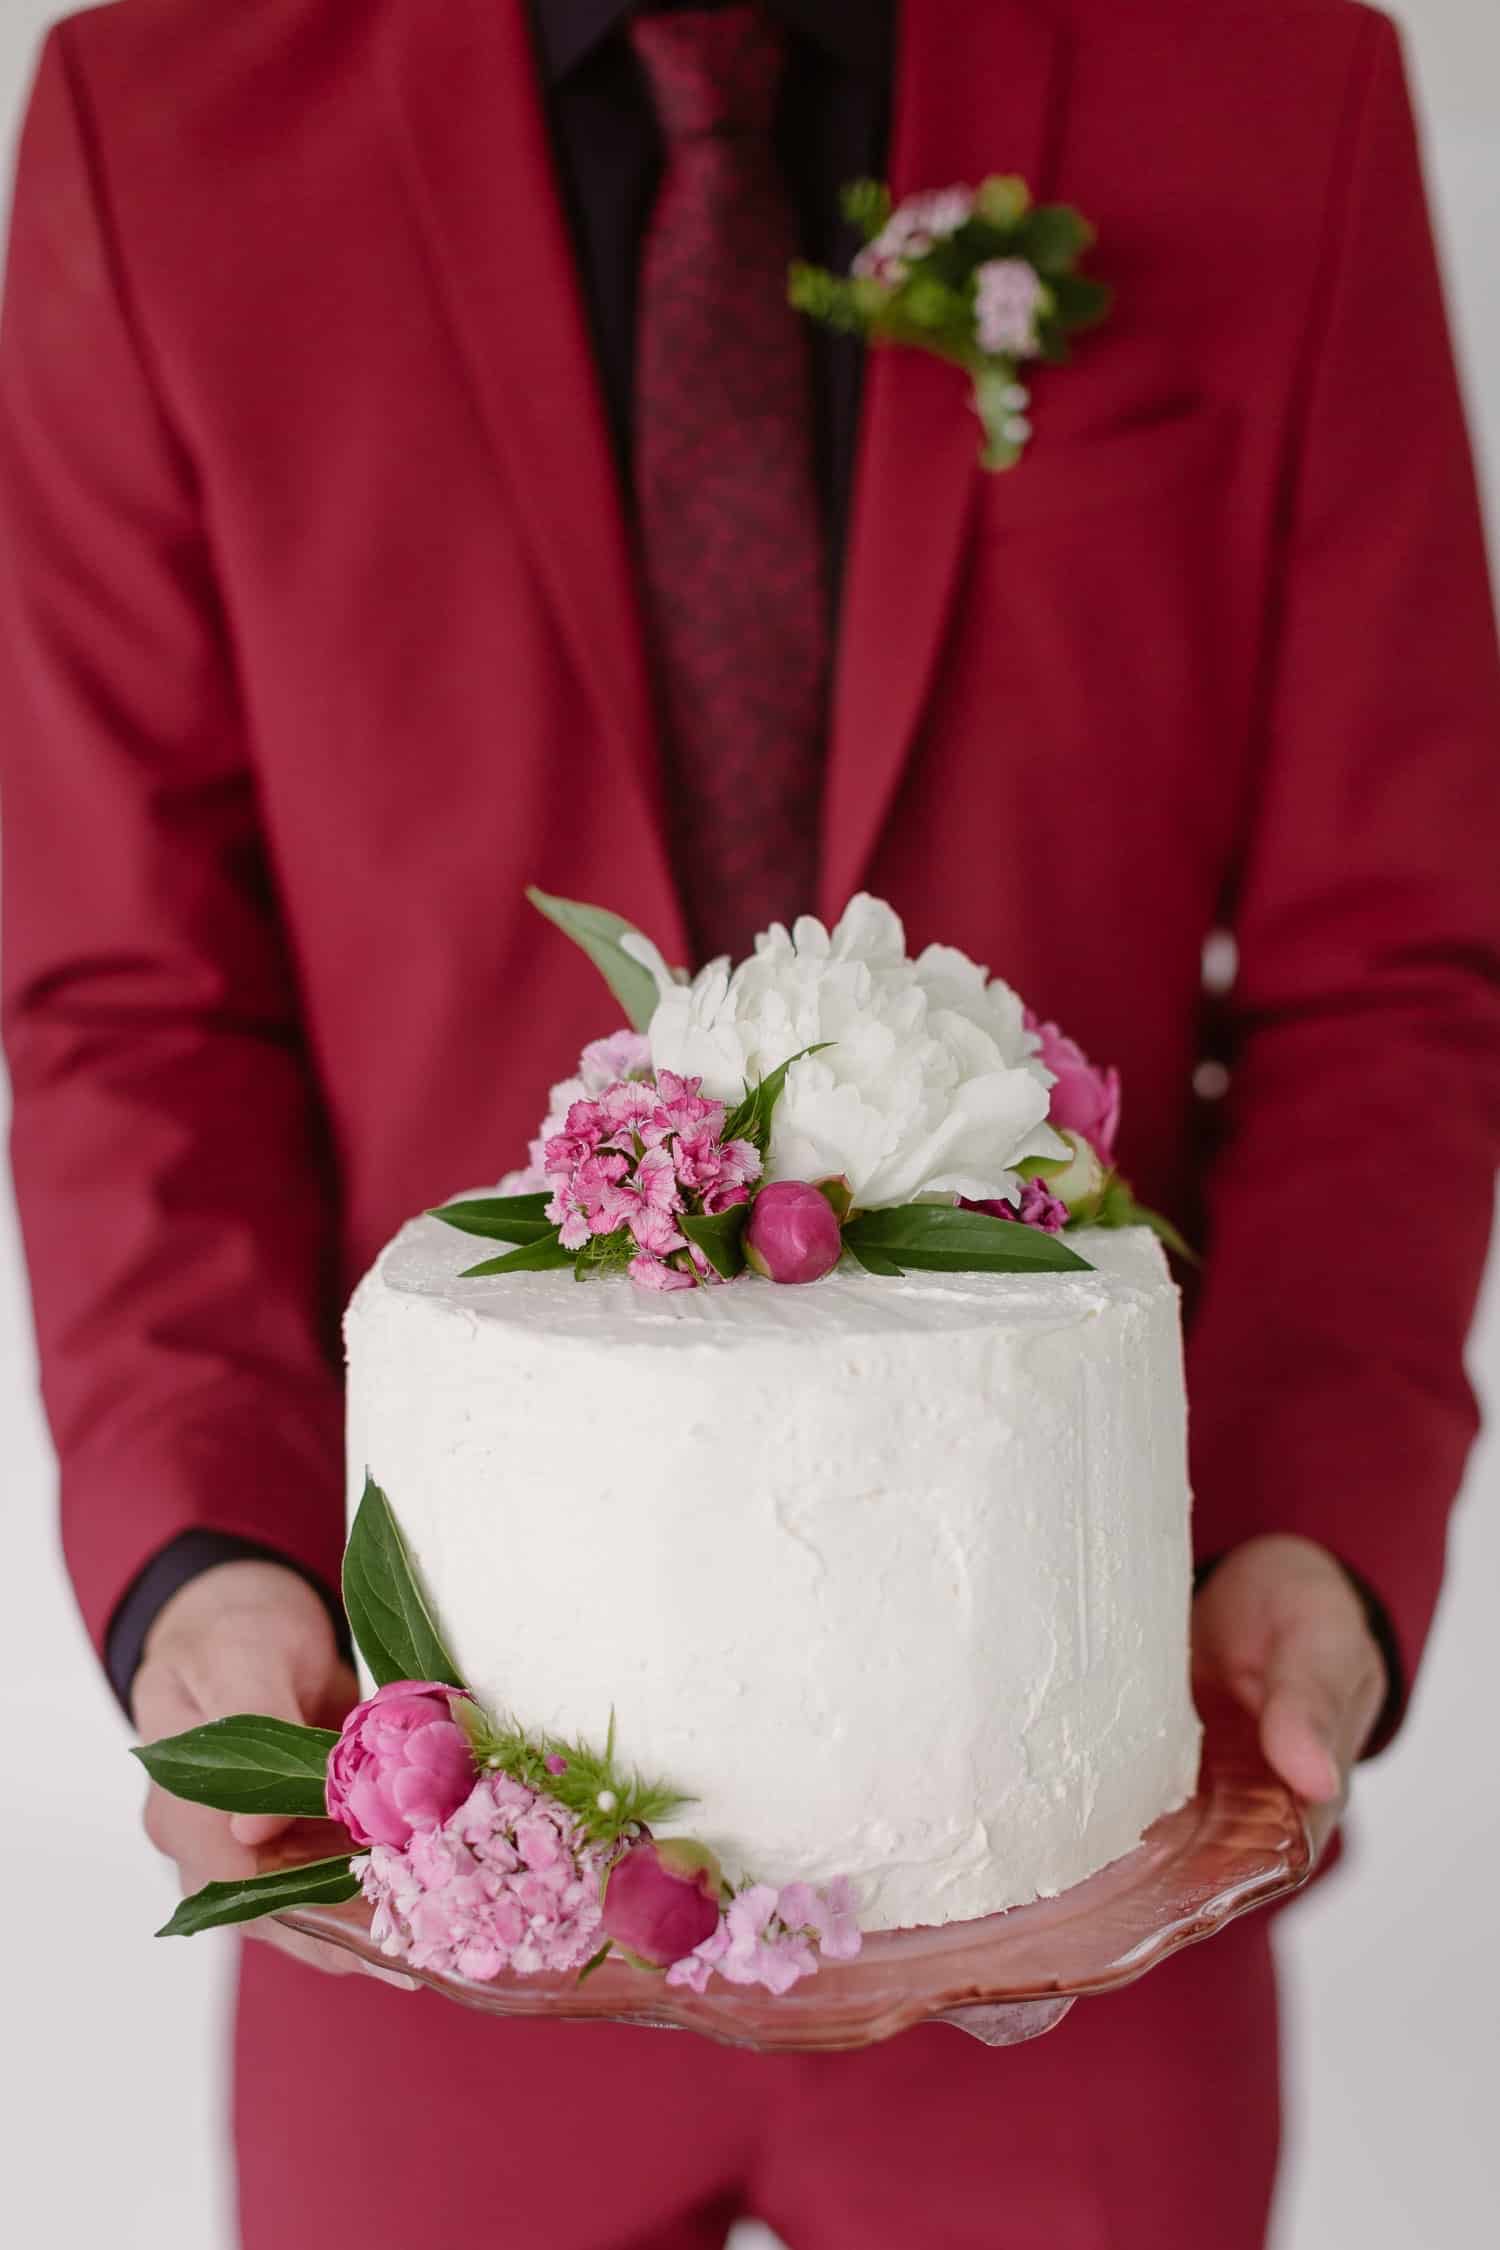 Groom holding wedding cake